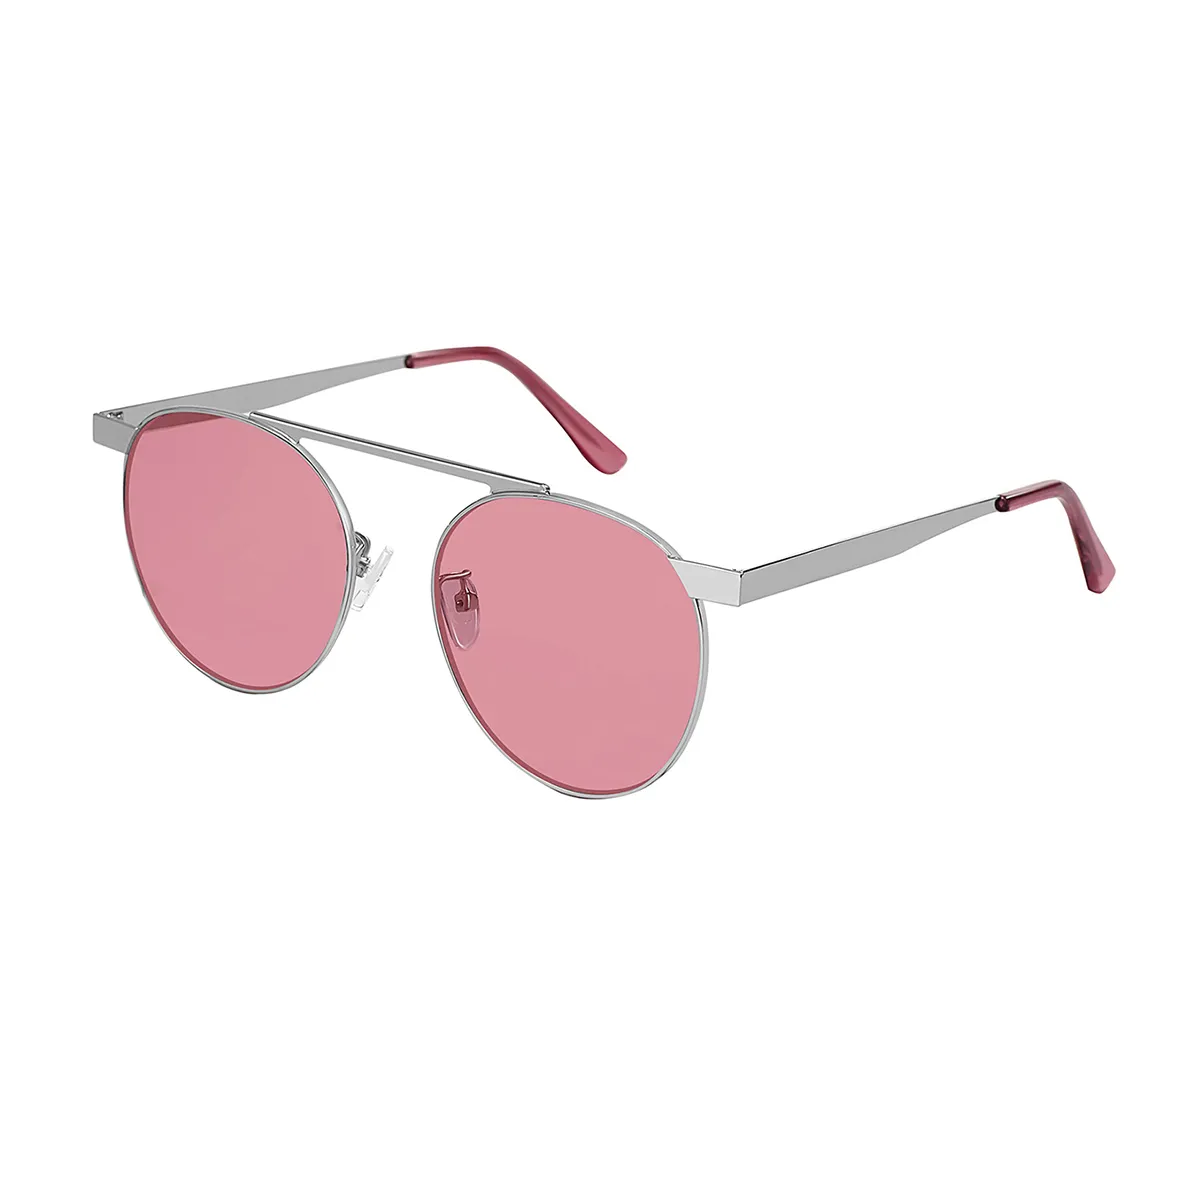 Cochran - Round Pink-Silver Sunglasses for Women